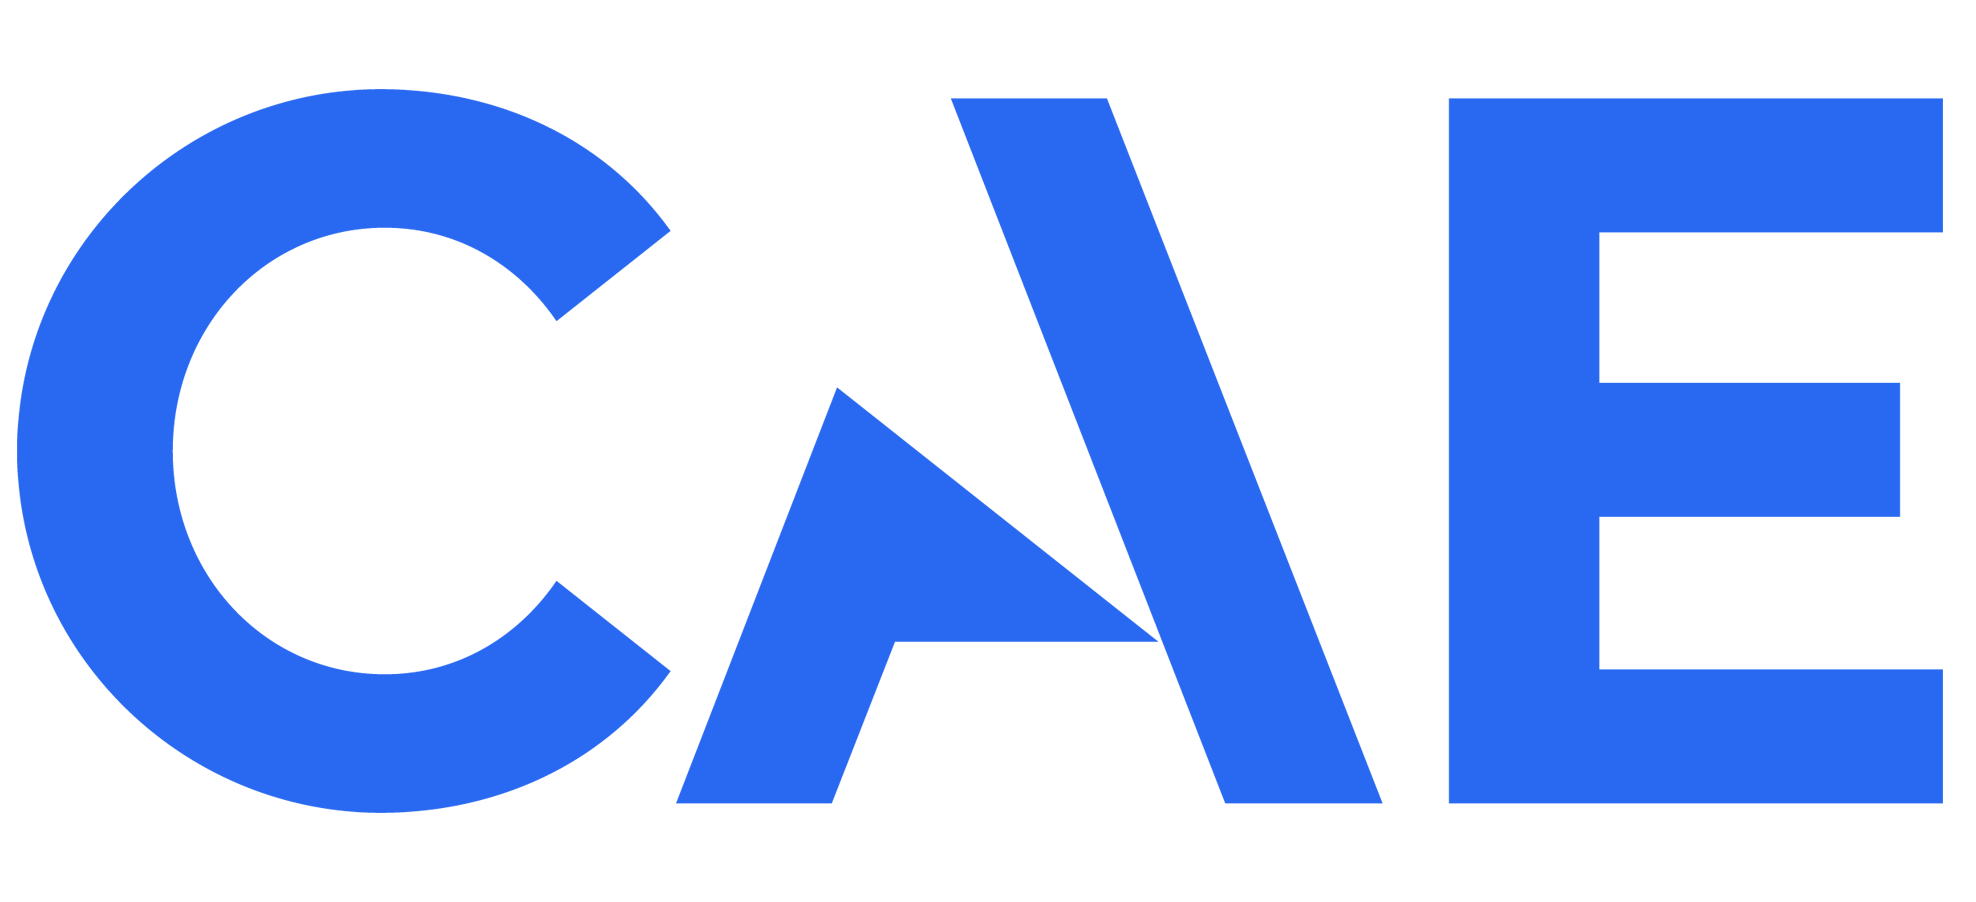 CAE logo in branded blue color